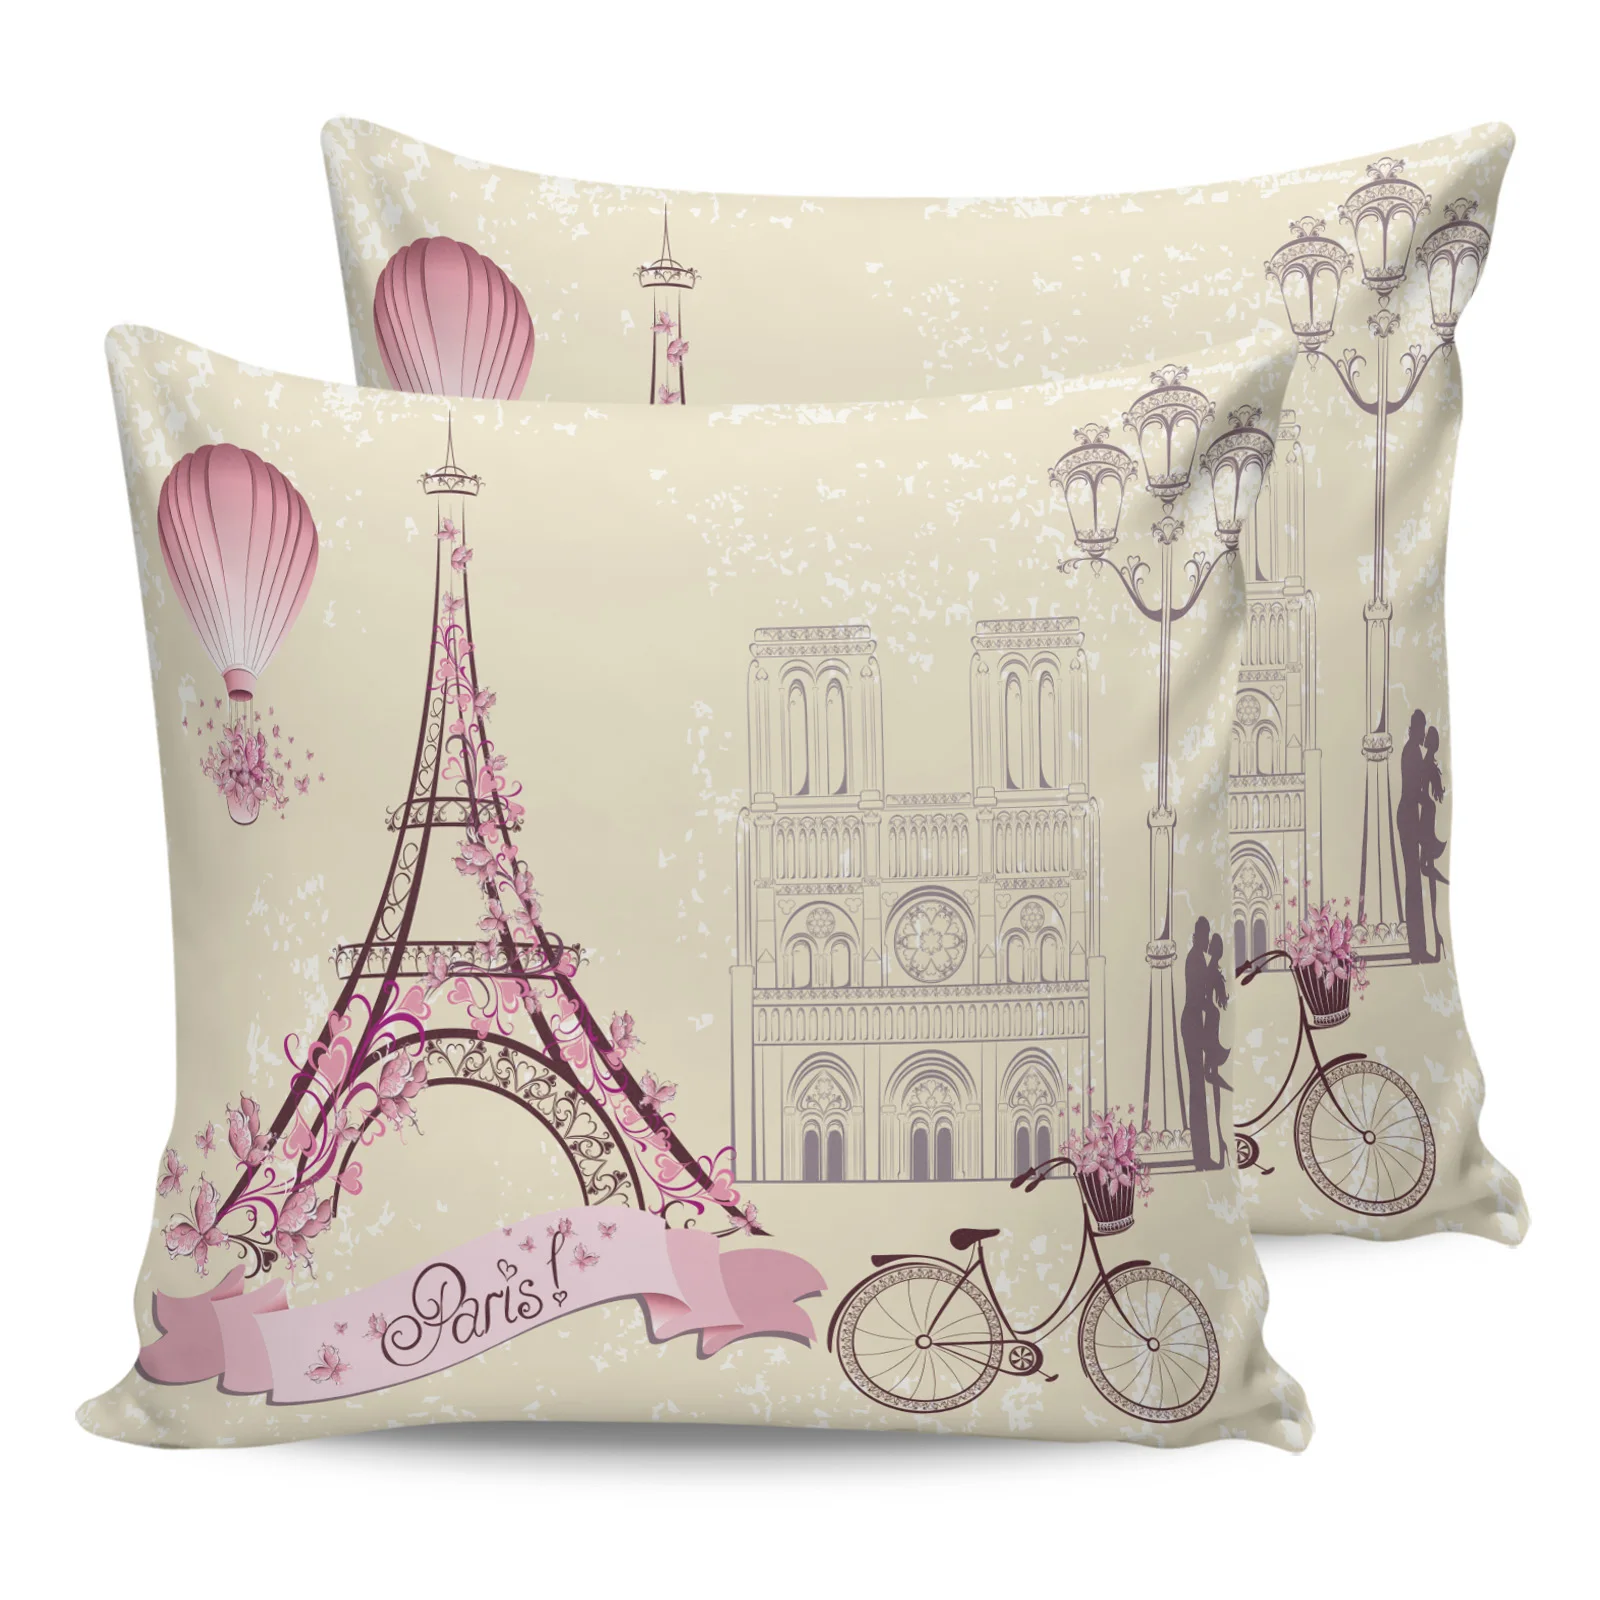 

2PCS Pillowcases France Paris Tower Hot Air Balloon Retro Cushion Cover Home Bedding Room Decorative Couch Throw Pillow Case